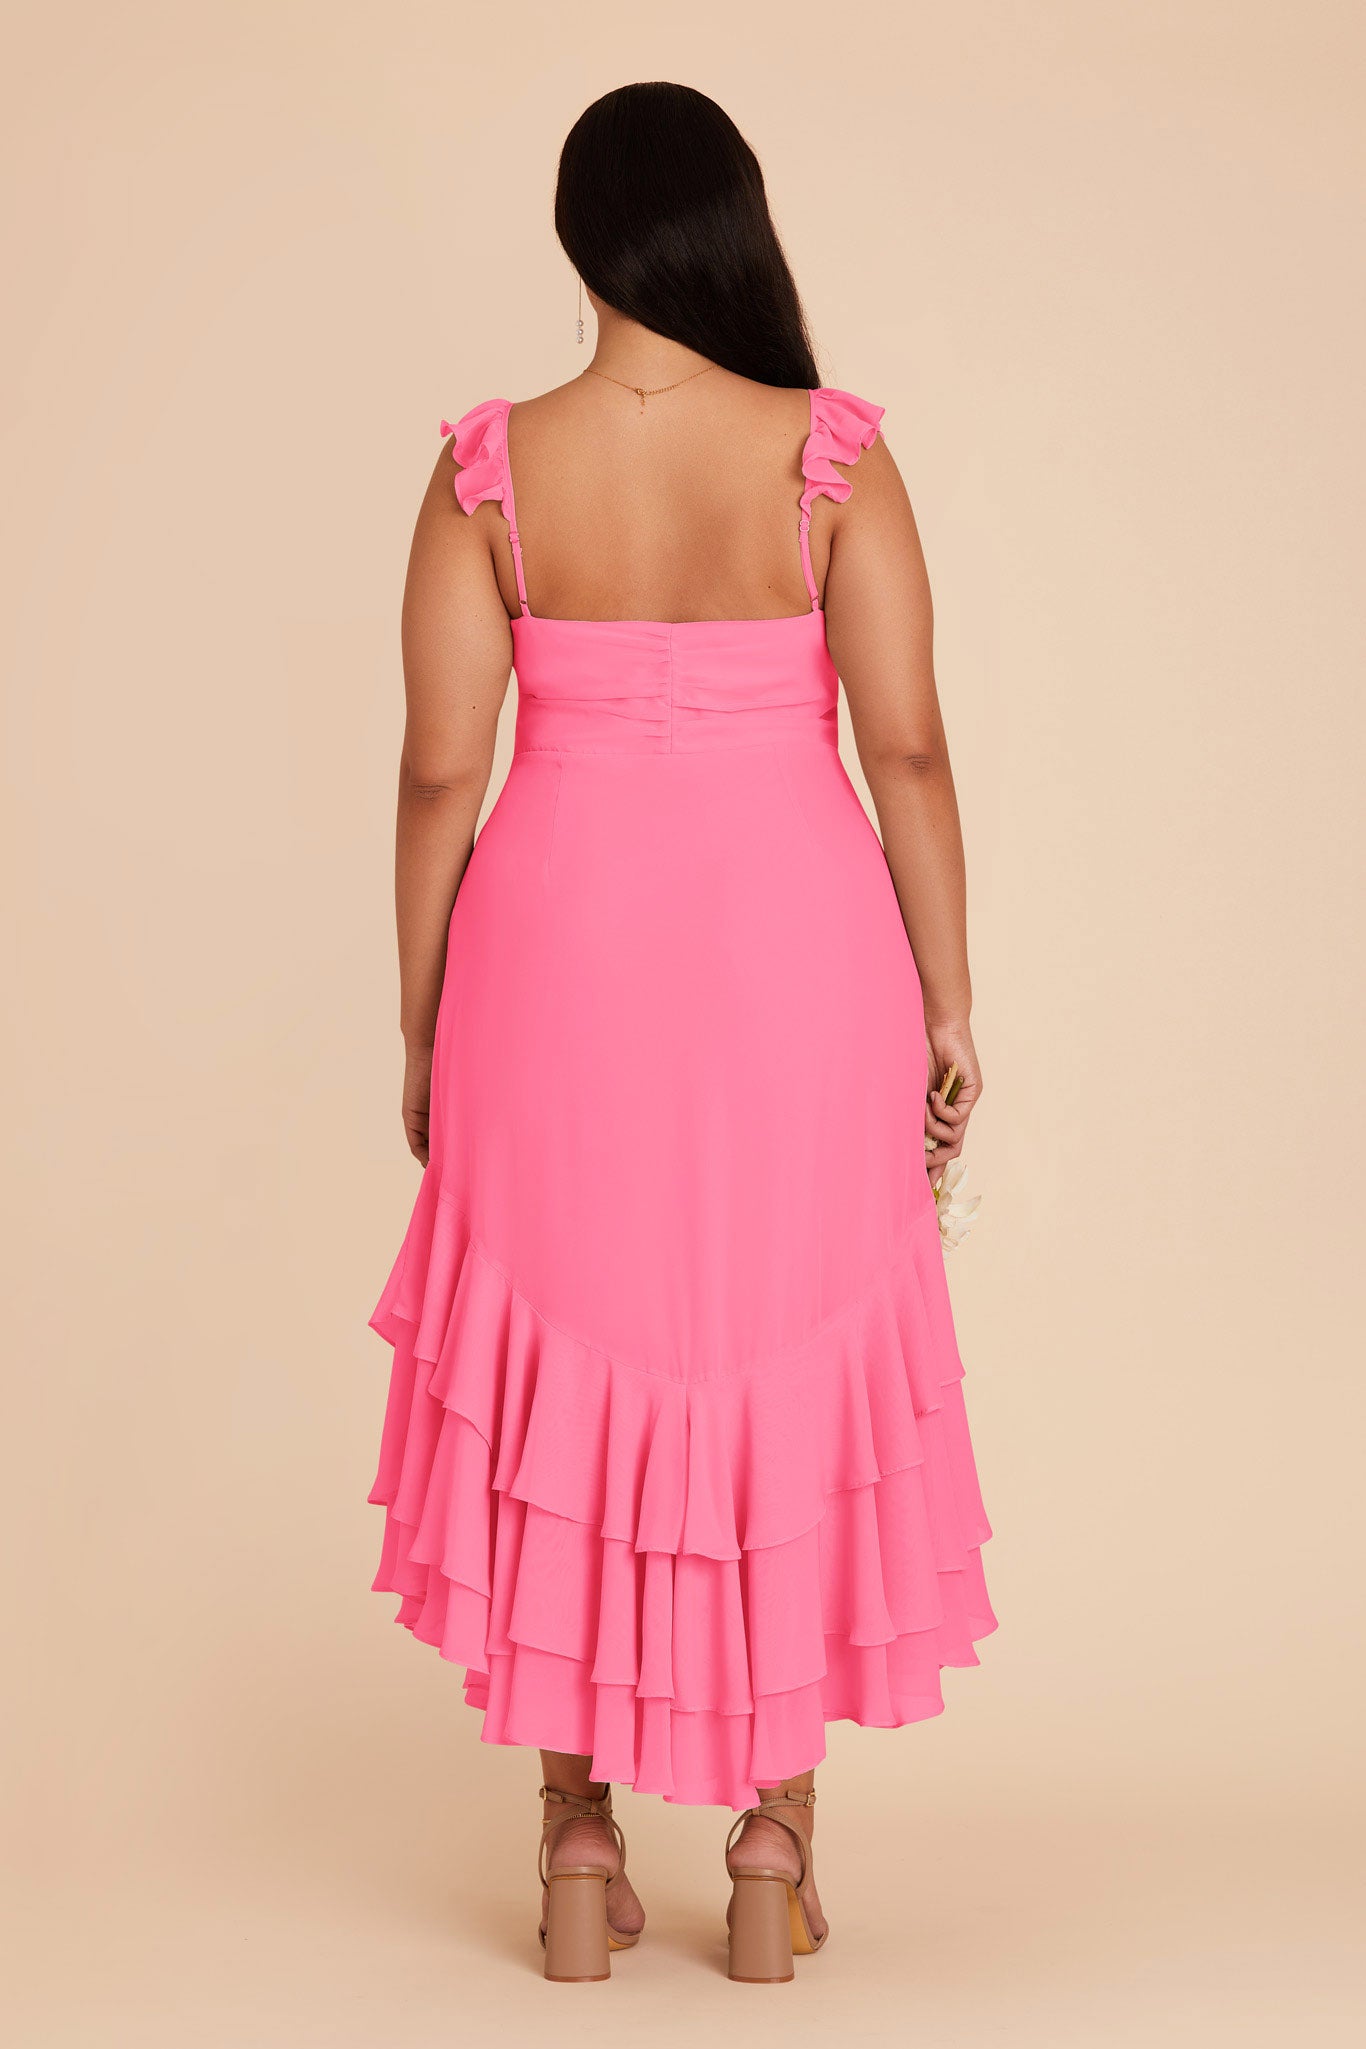 Bon Bon Pink Ginny Chiffon Dress by Birdy Grey